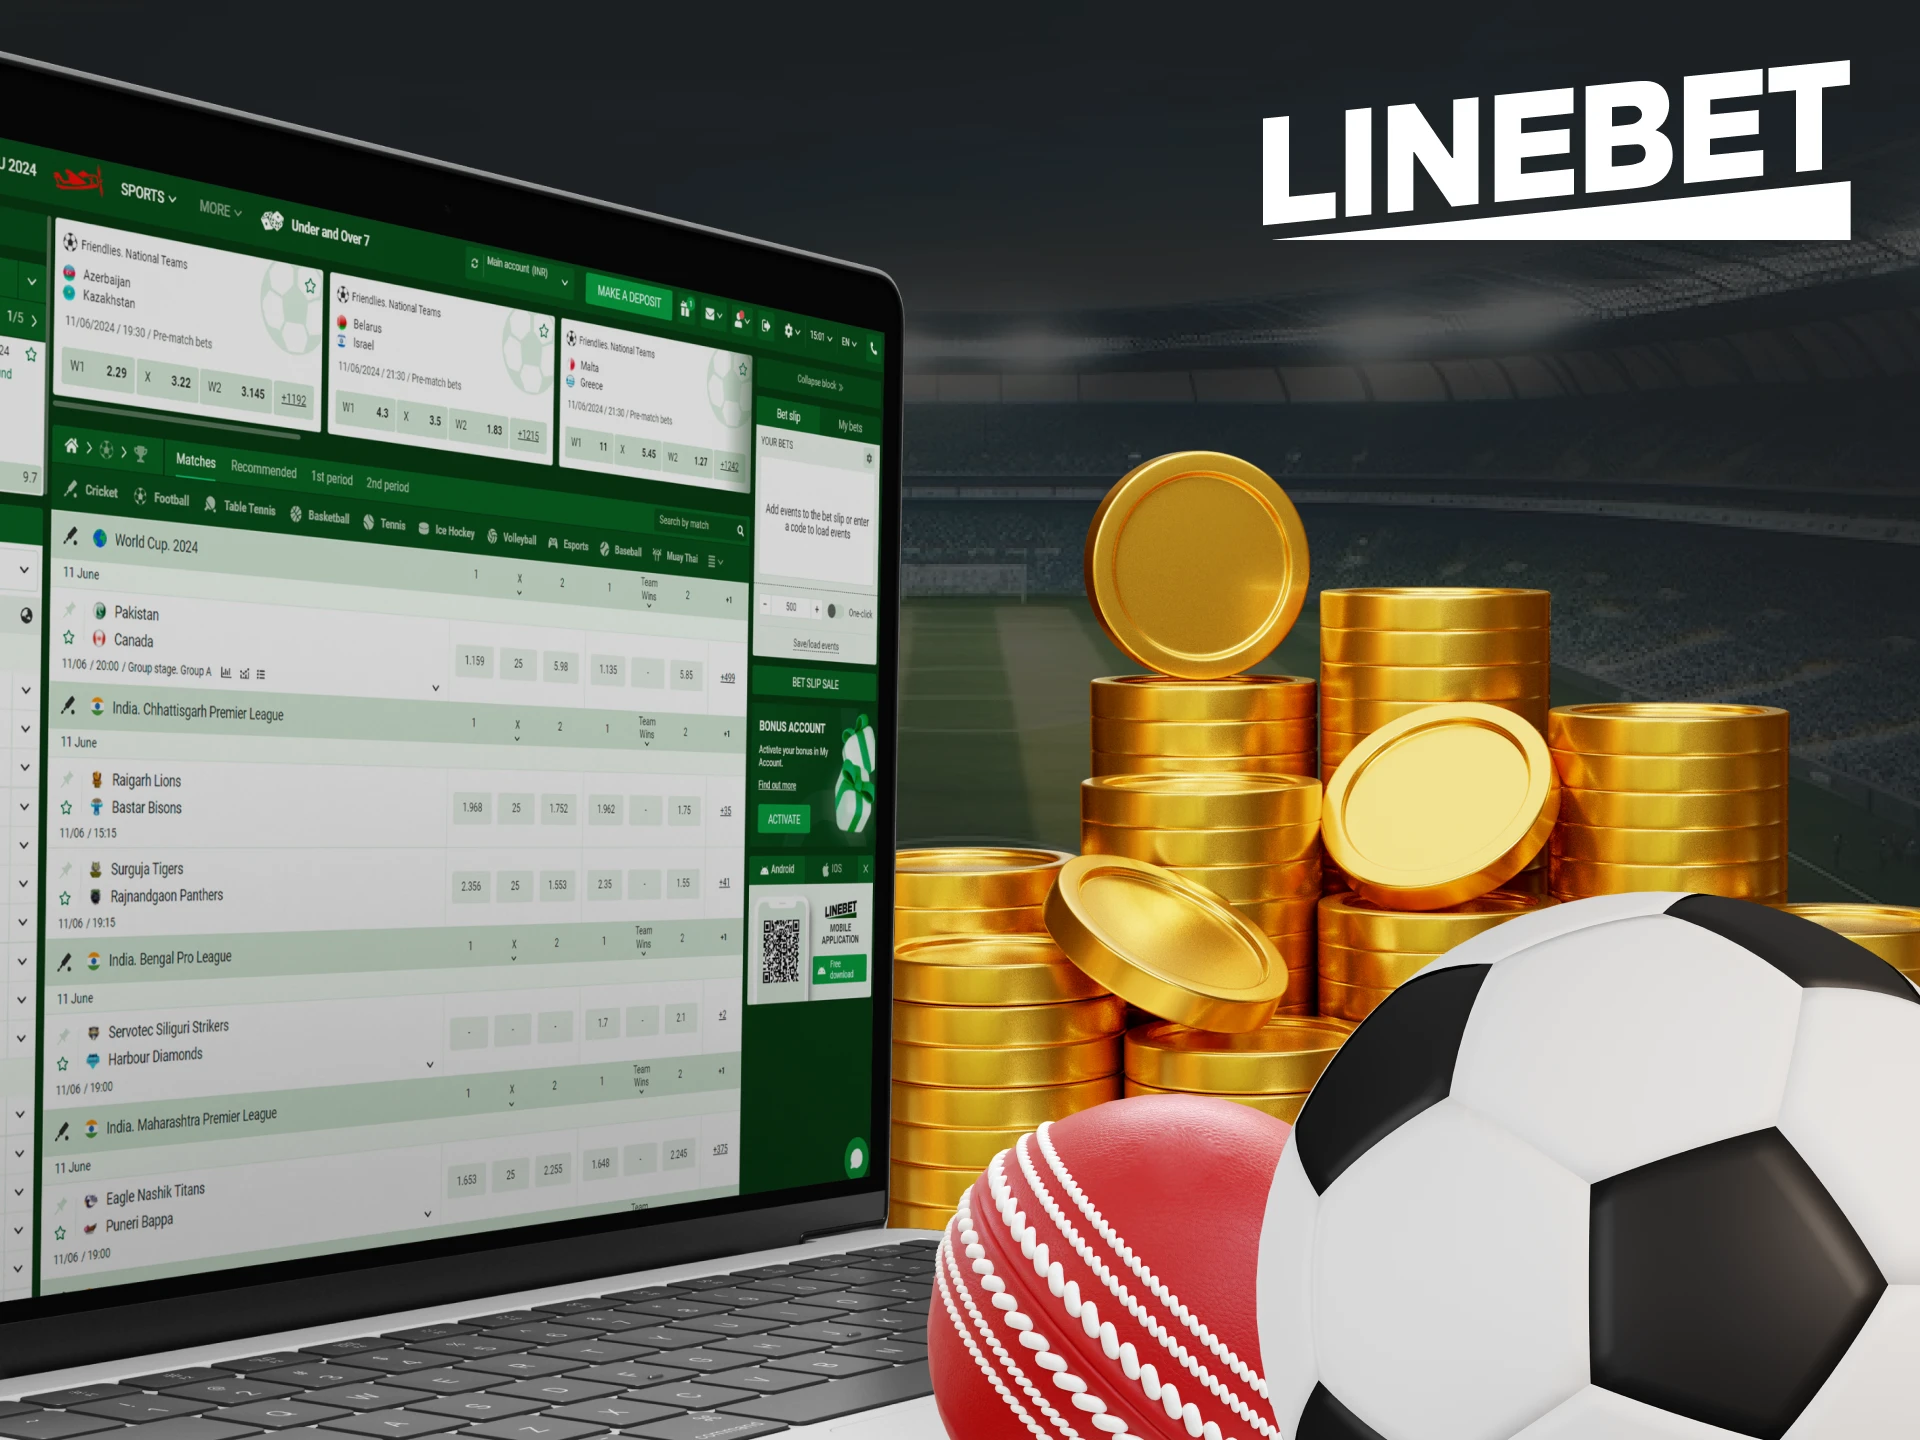 Start betting on Linebet.